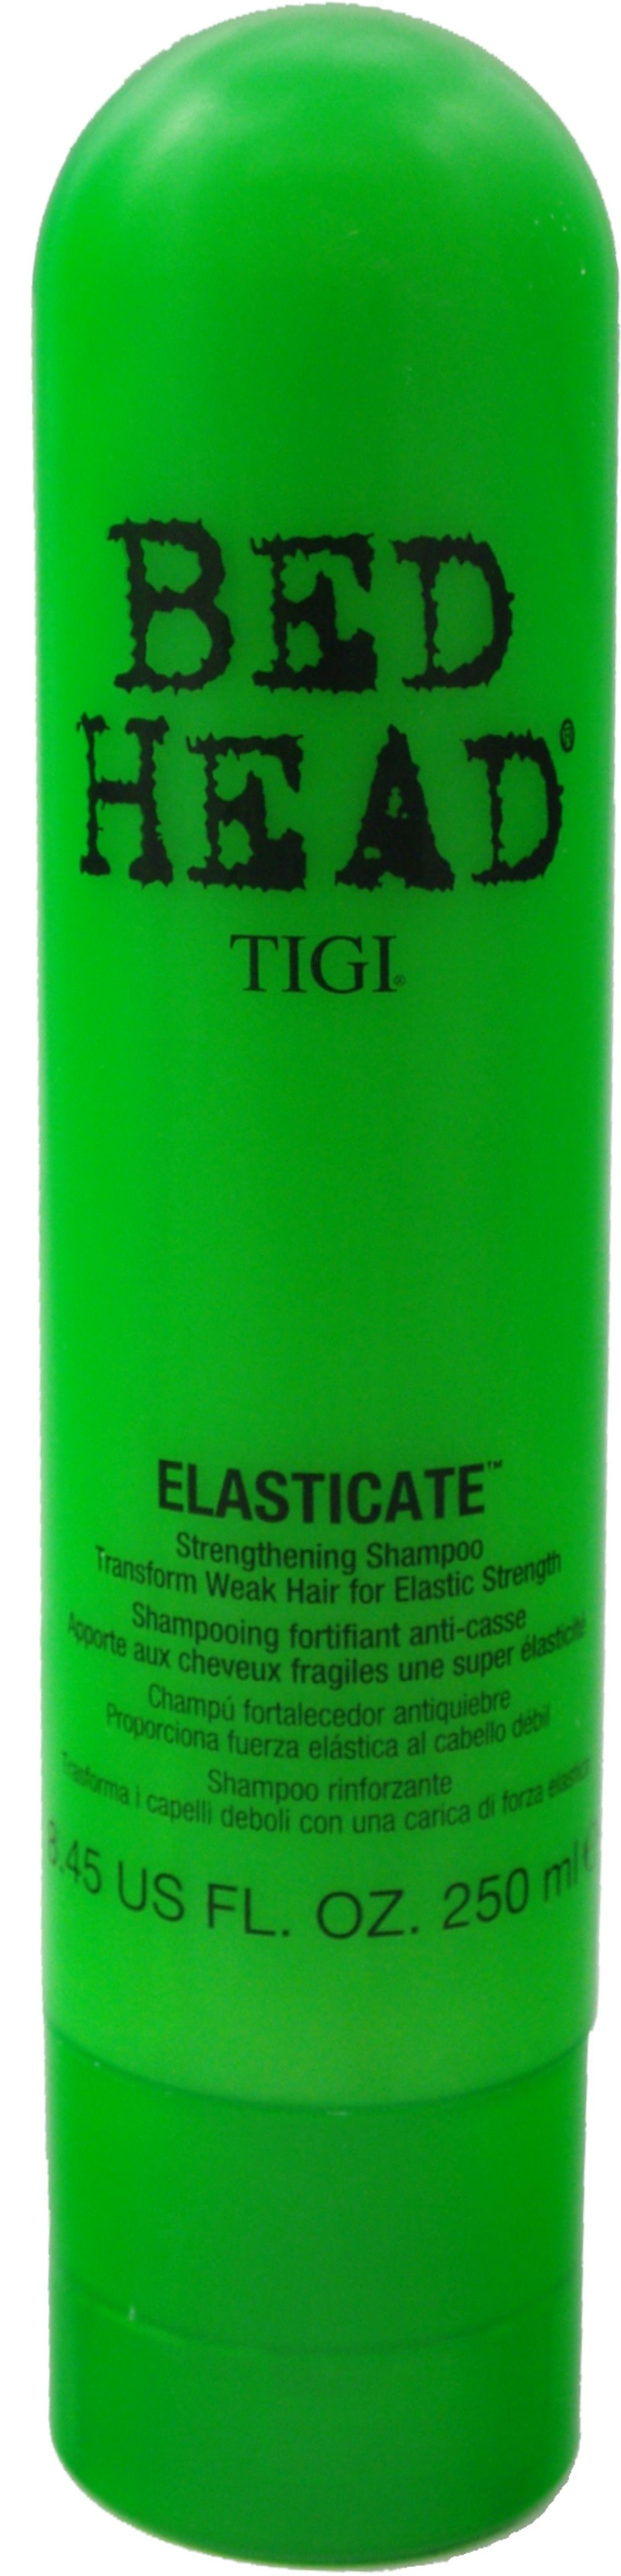 TIGI Bed Head ELASTICATE Strengthening Shampoo 250 ml